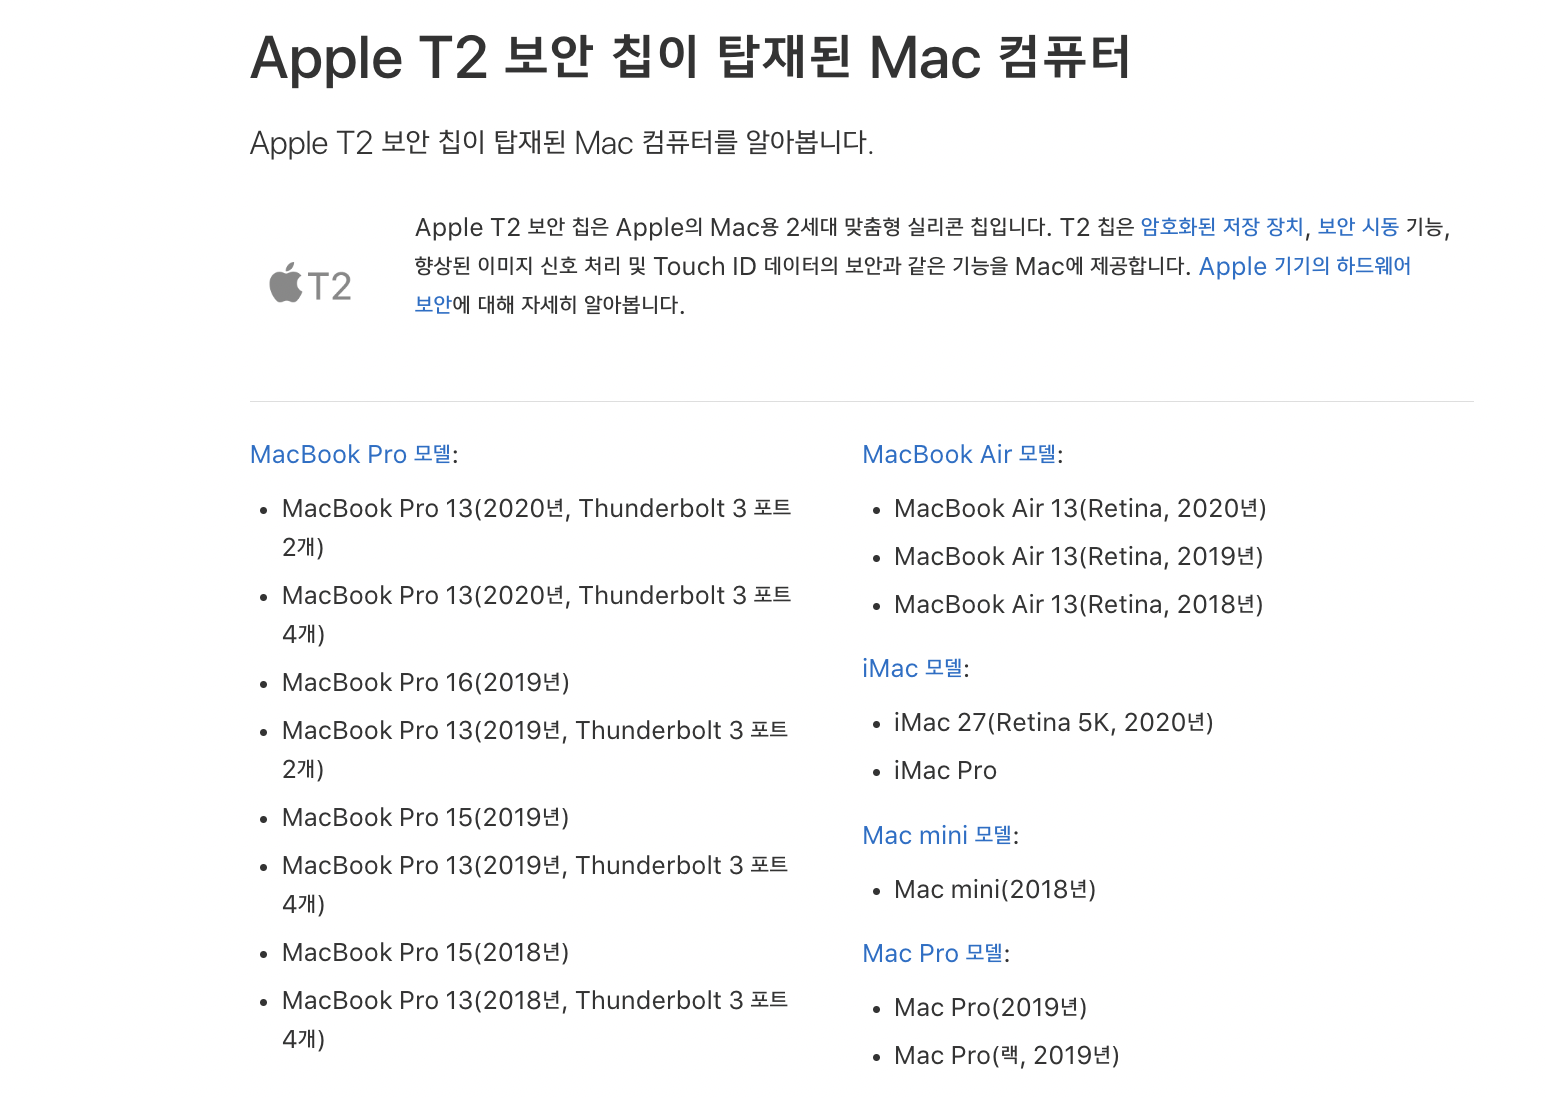 Apple T2 보안 칩이 탑재된 Mac